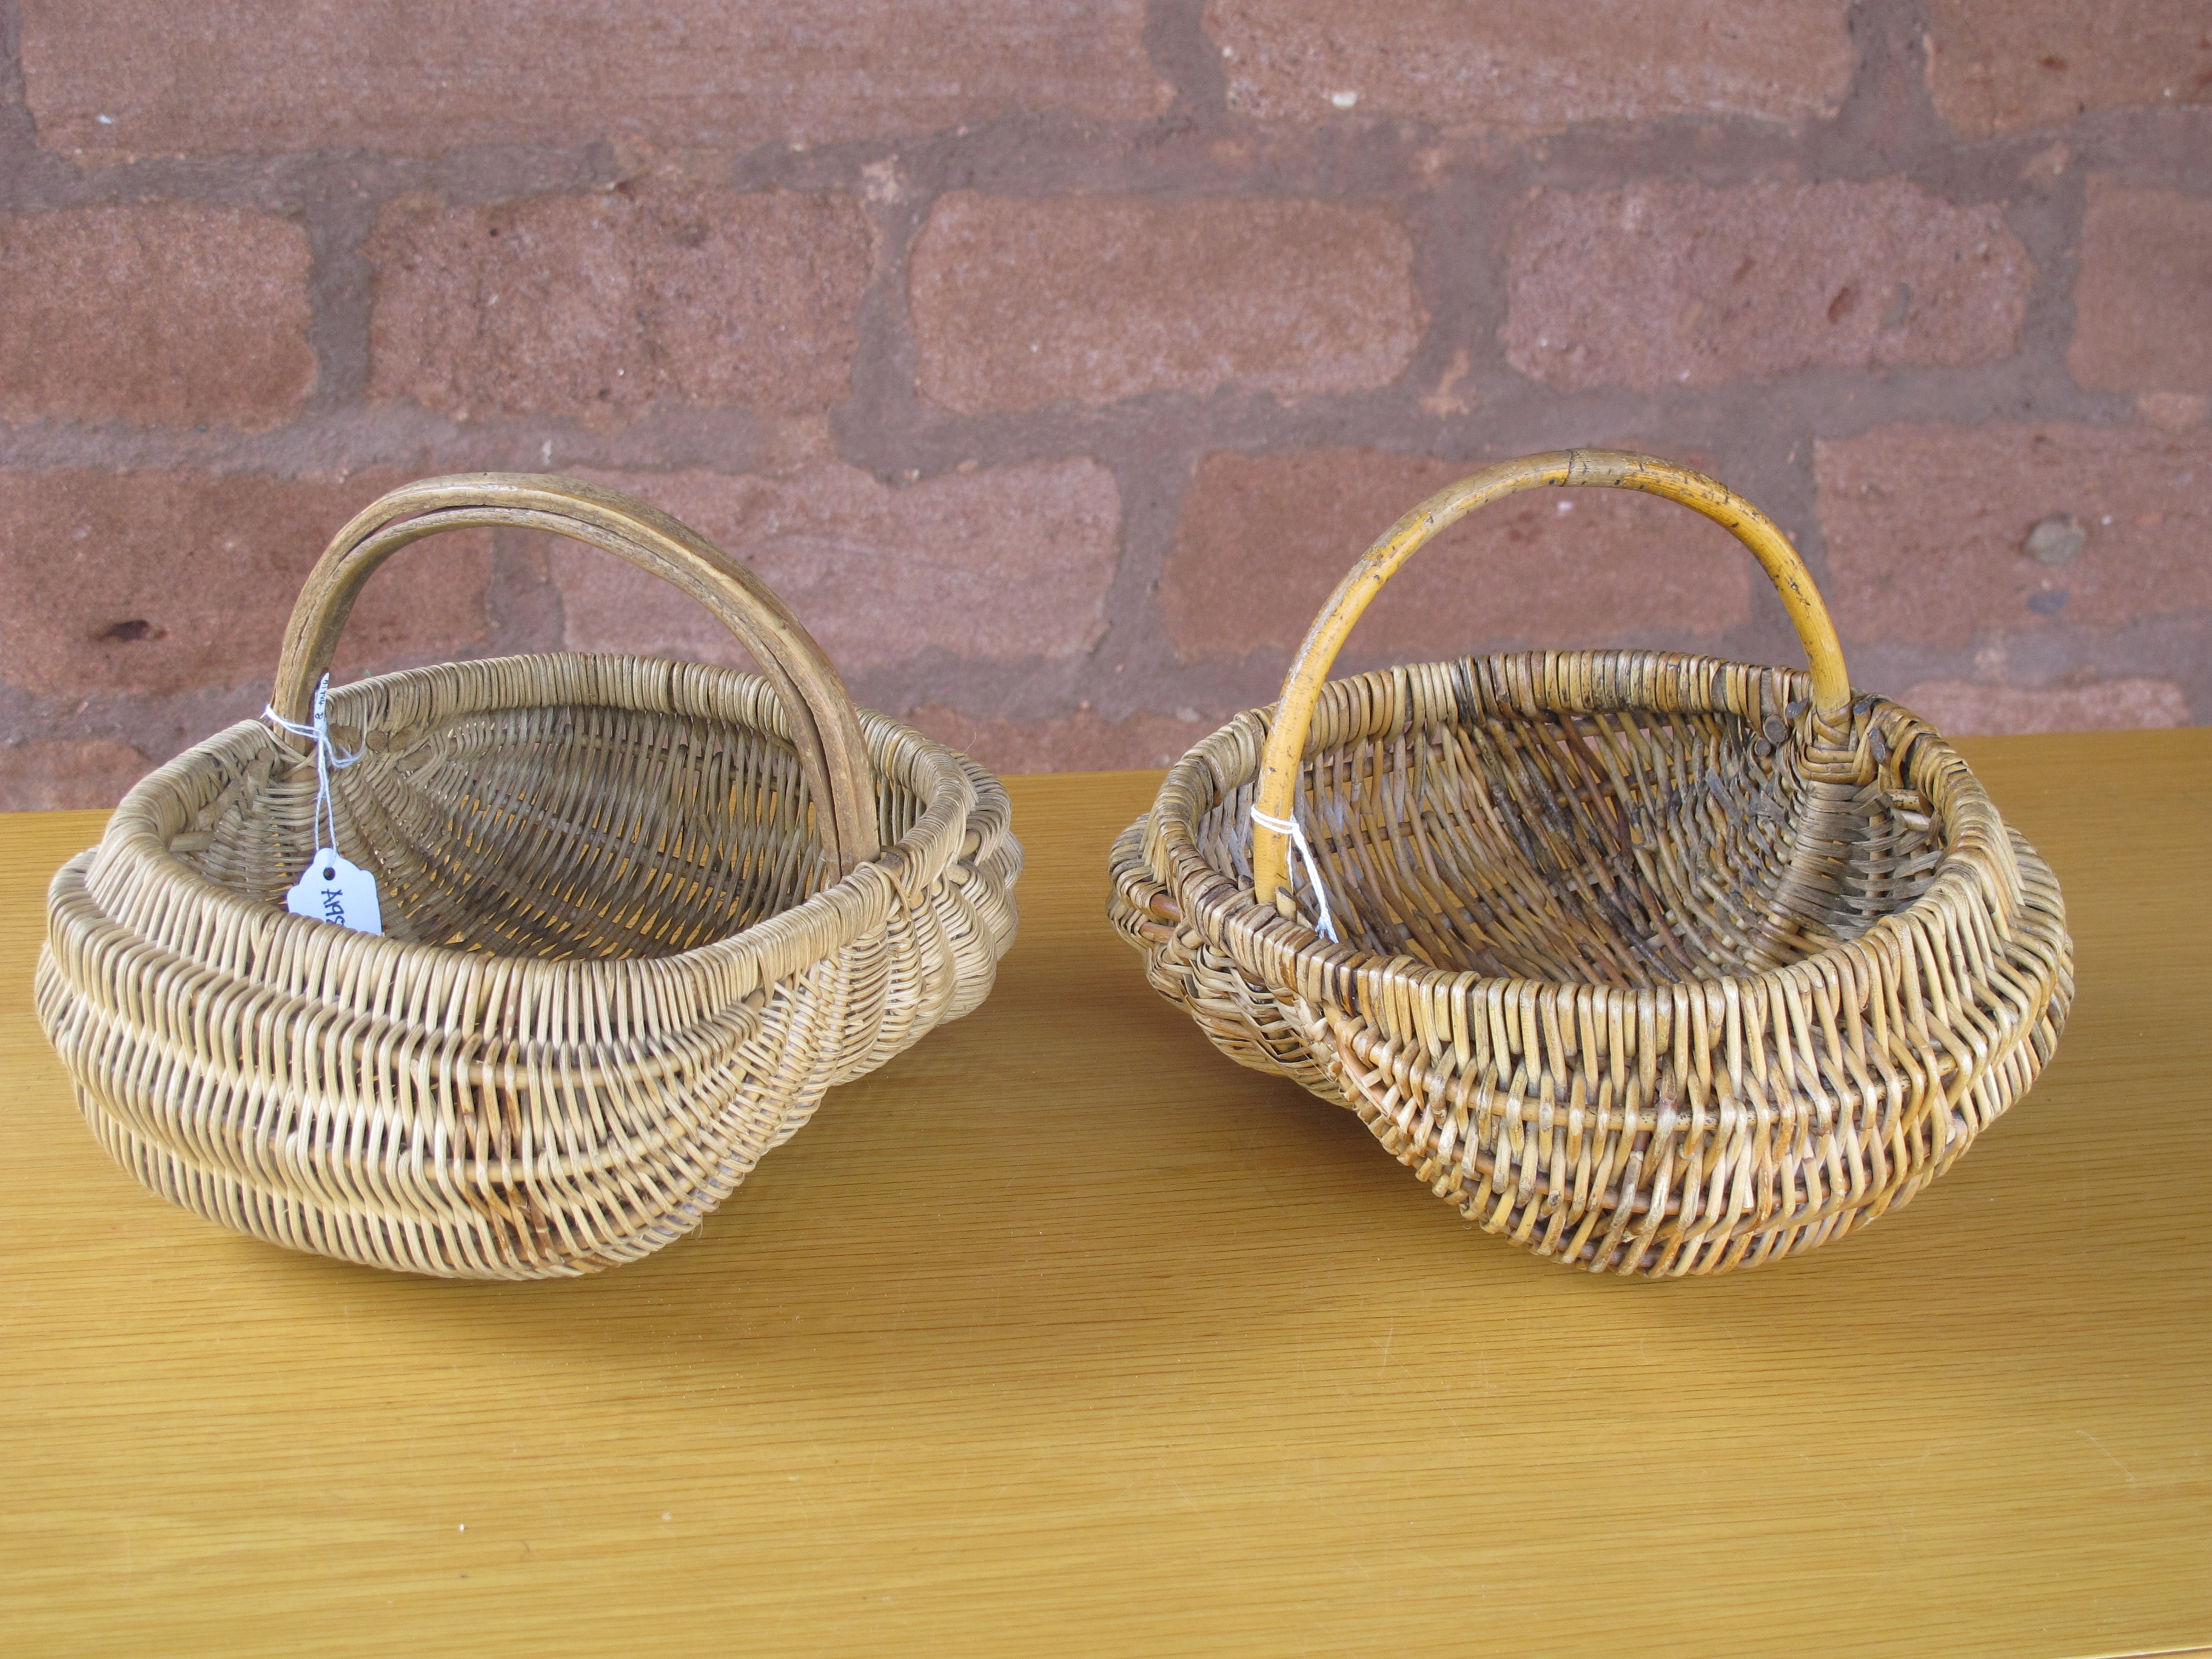 Arbroath fisher-lassies baskets